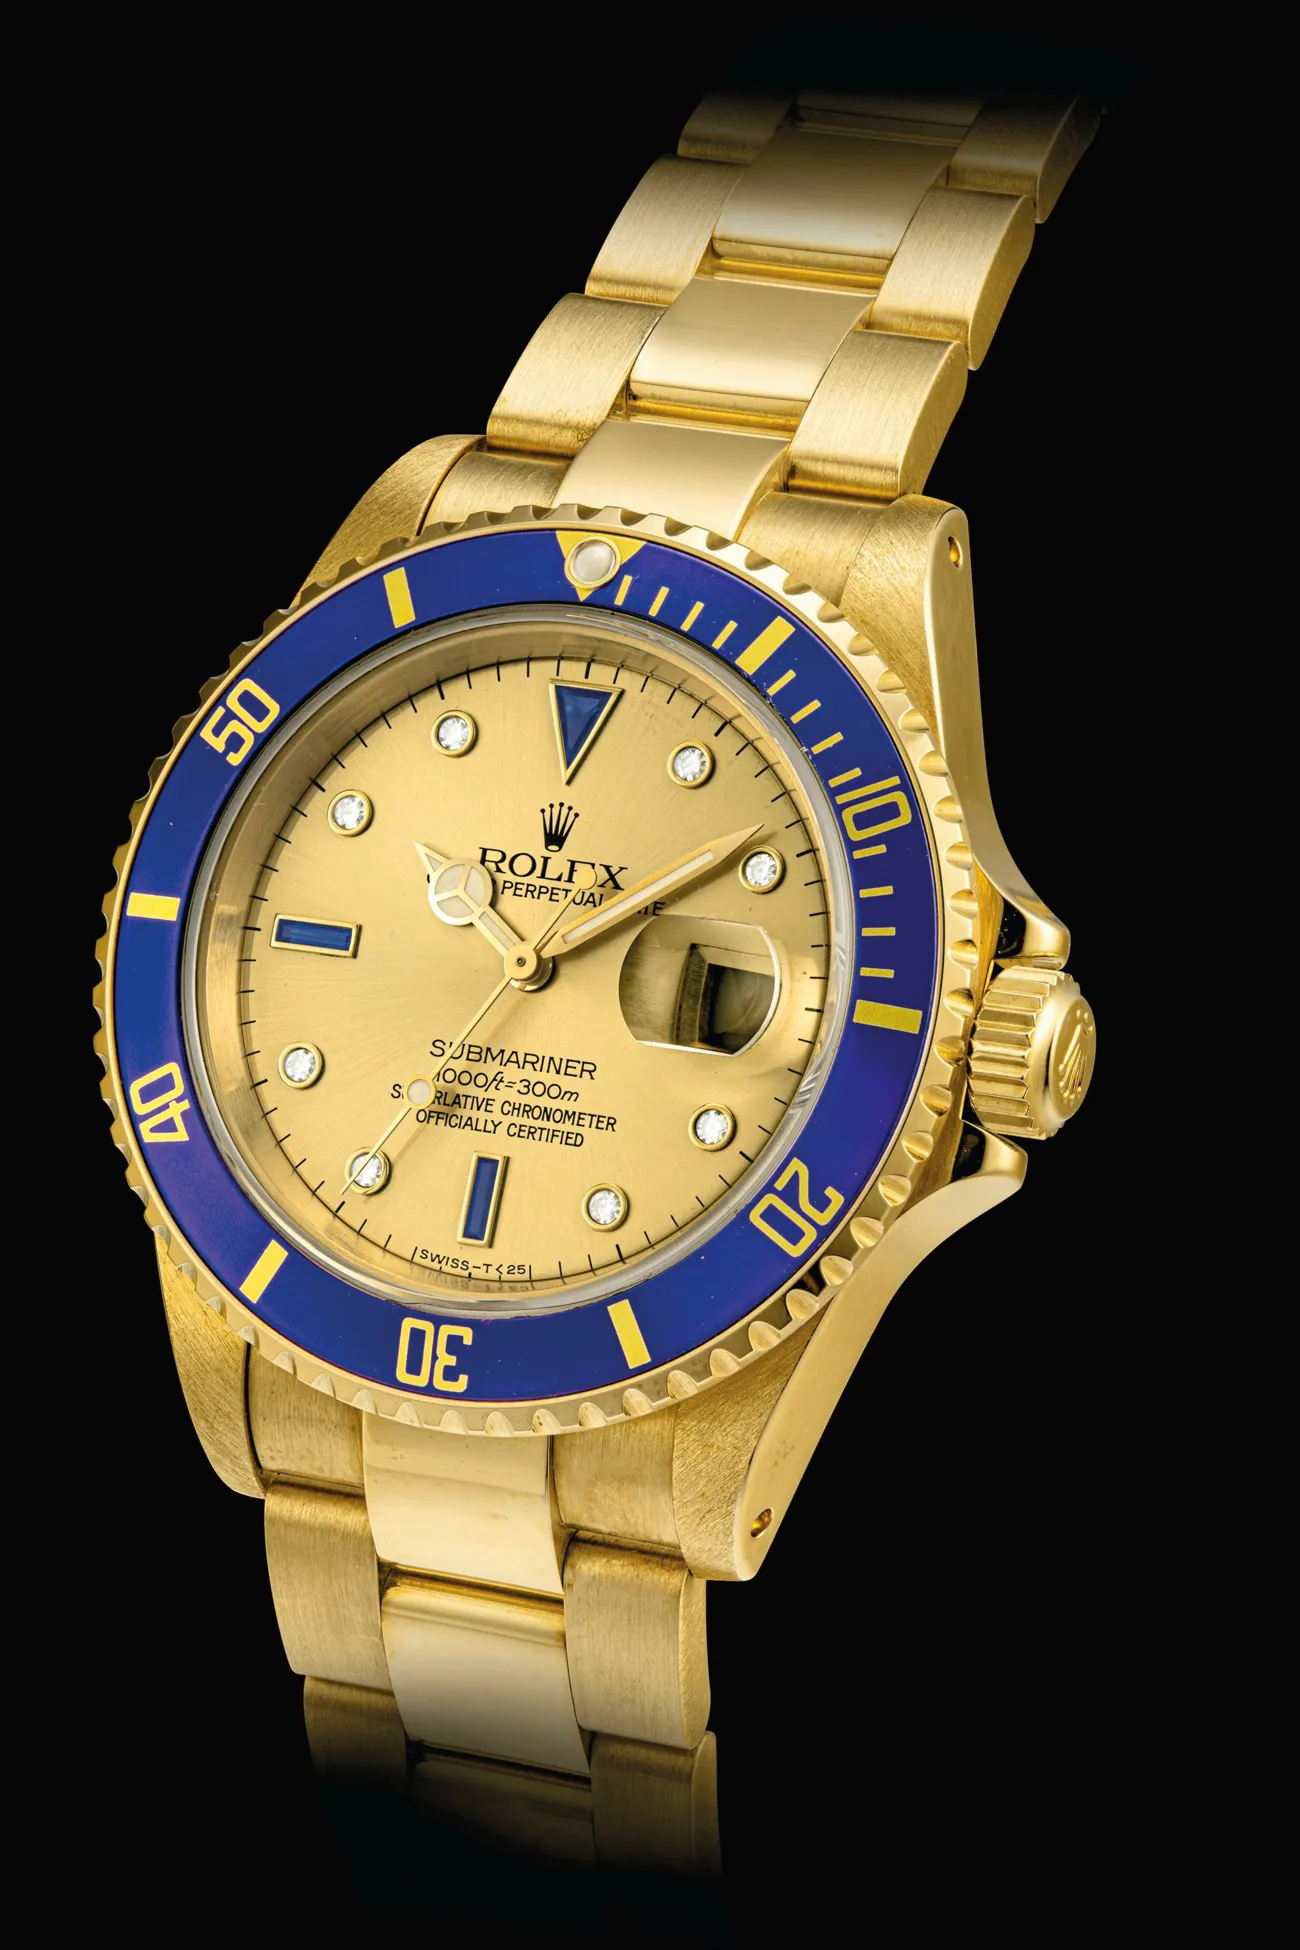 Rolex Submariner 16618 40mm 18k gold, diamond and sapphire-set Gold